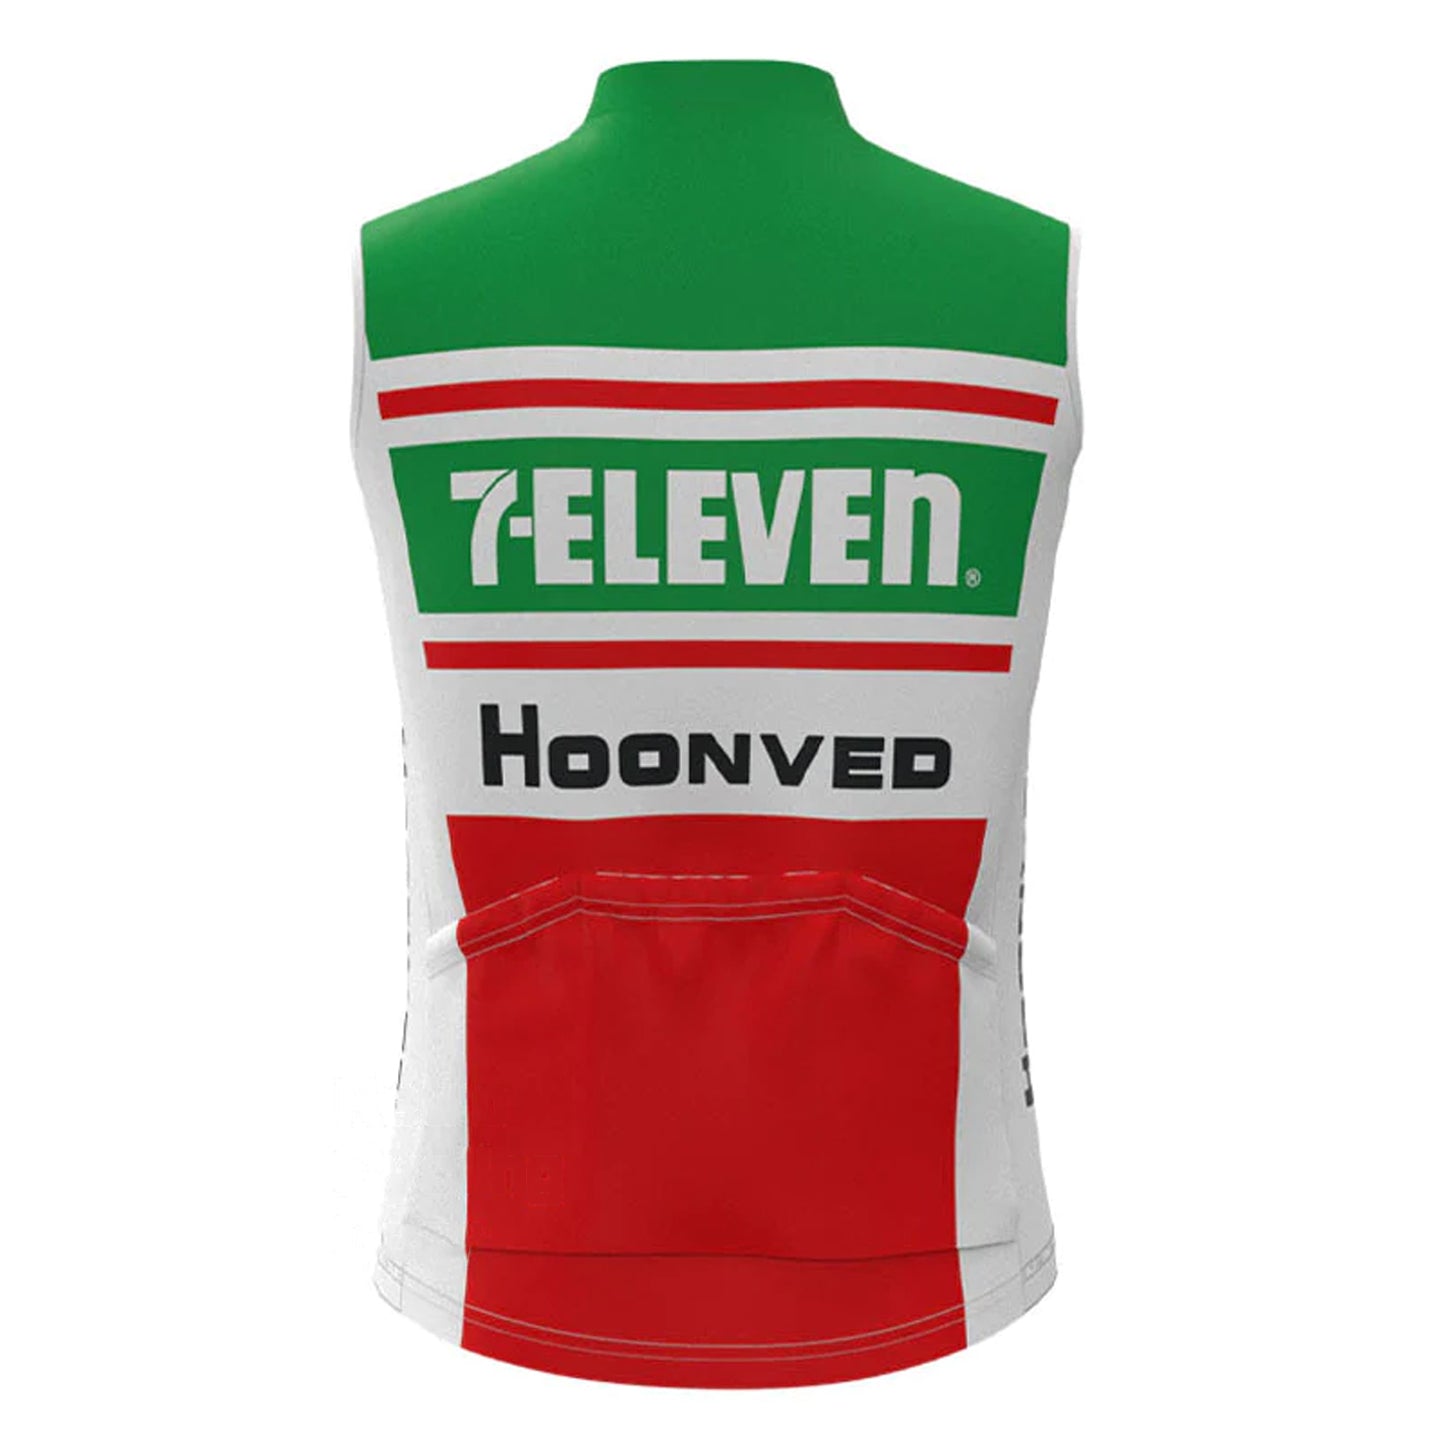 Hoonved 7-Eleven Retro MTB Cycling Vest